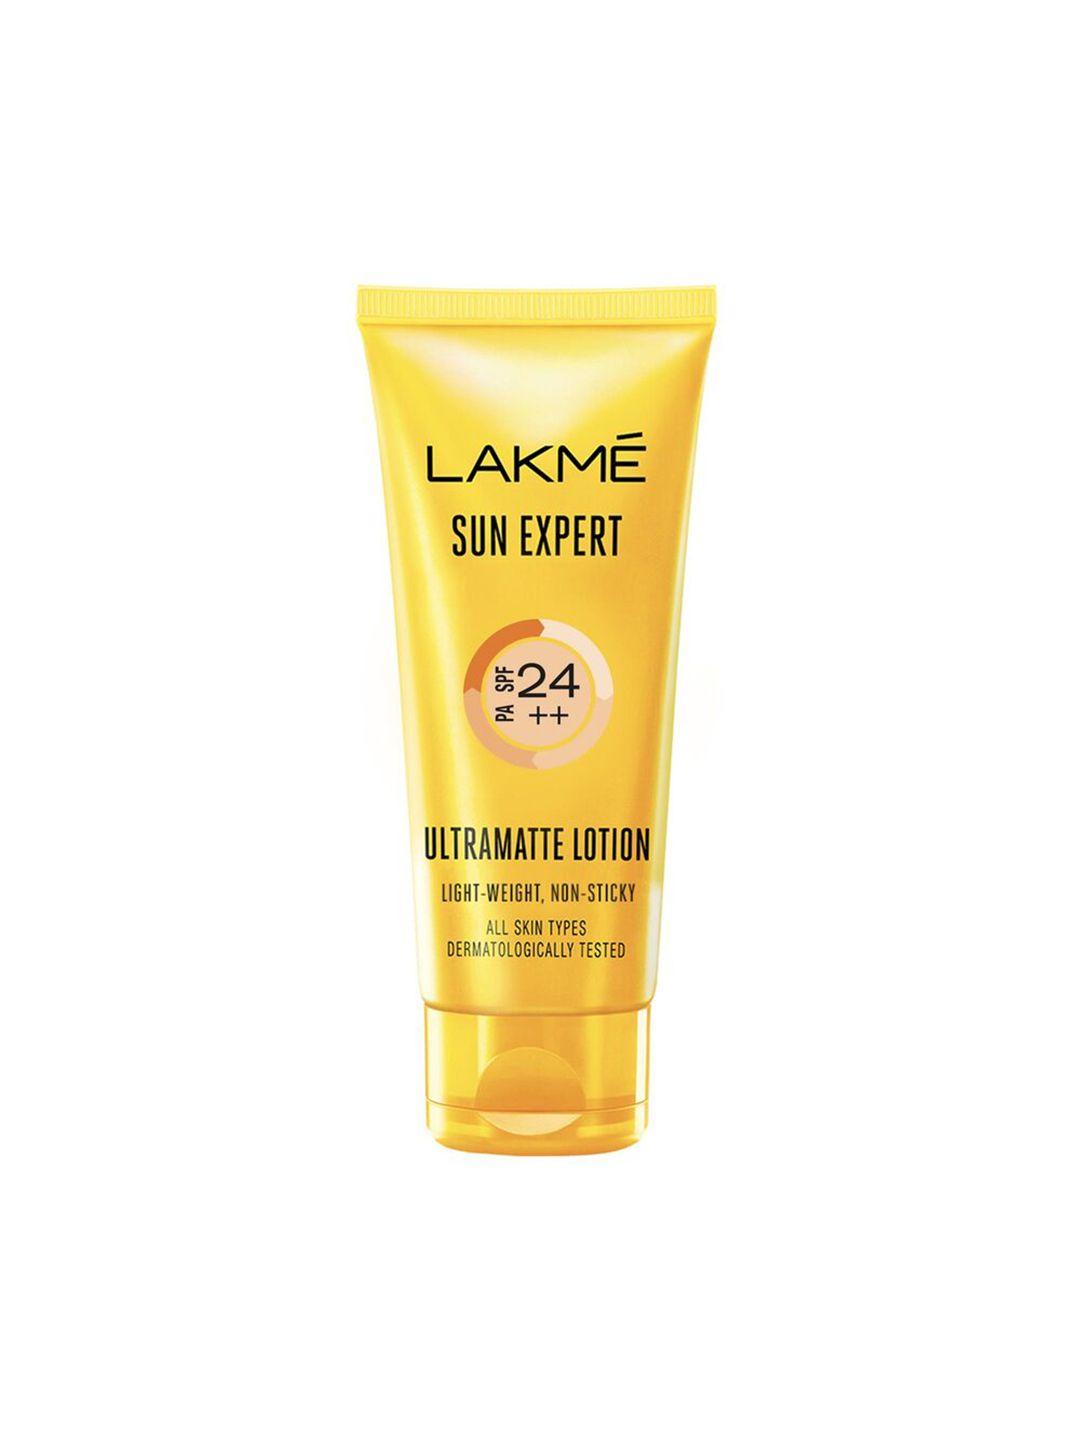 Lakme Women Sun Expert SPF 24 PA ++ UV Lotion 120 ml